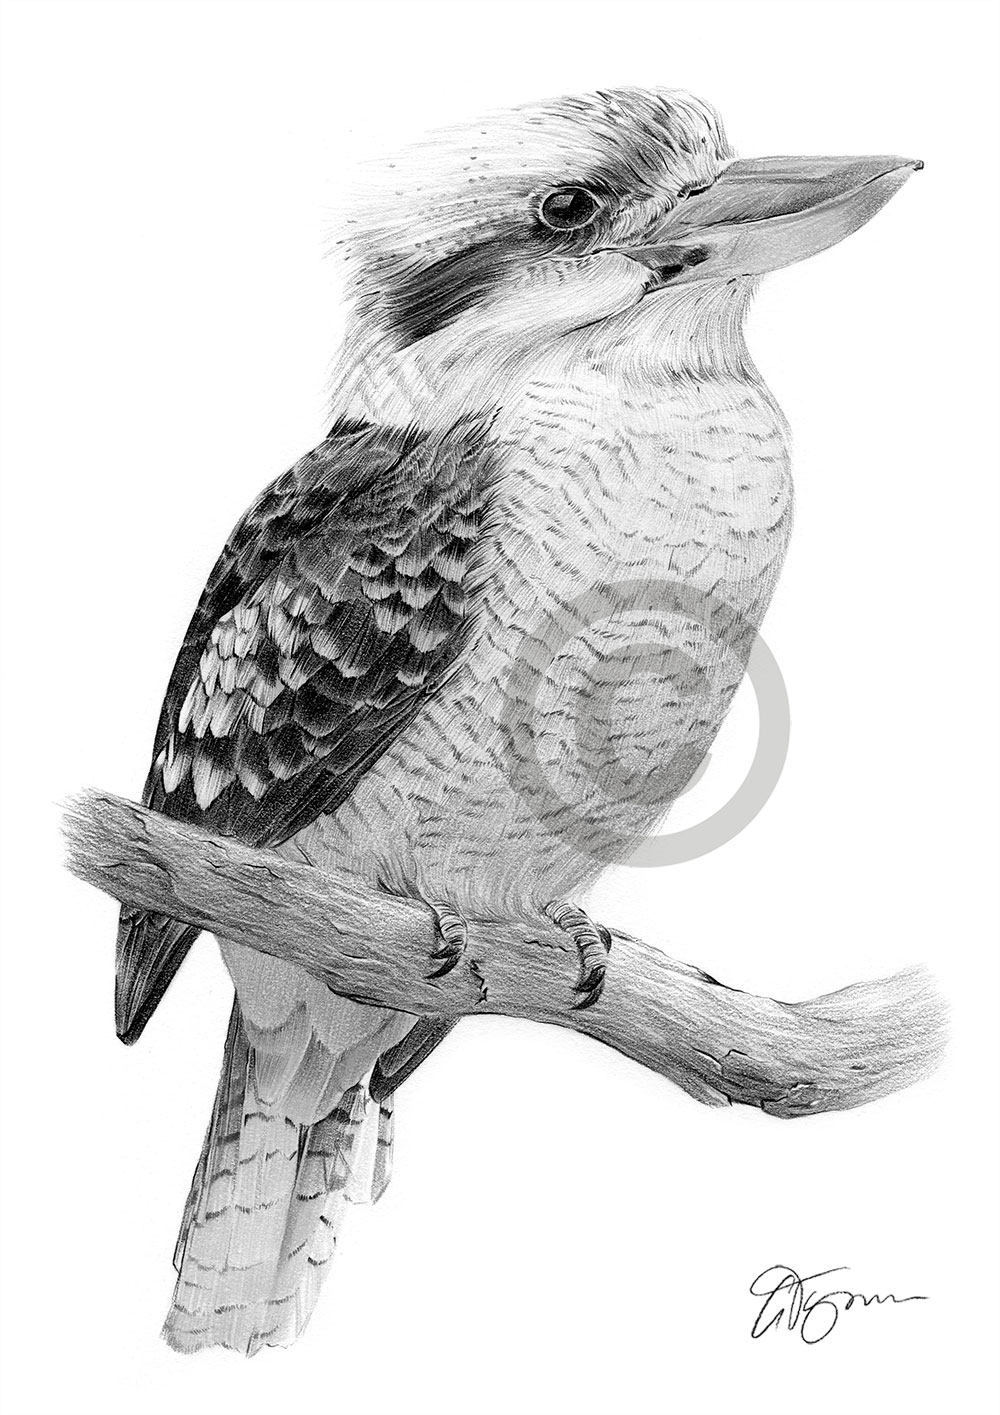 Pencil drawing of a kookaburra by artist Gary Tymon